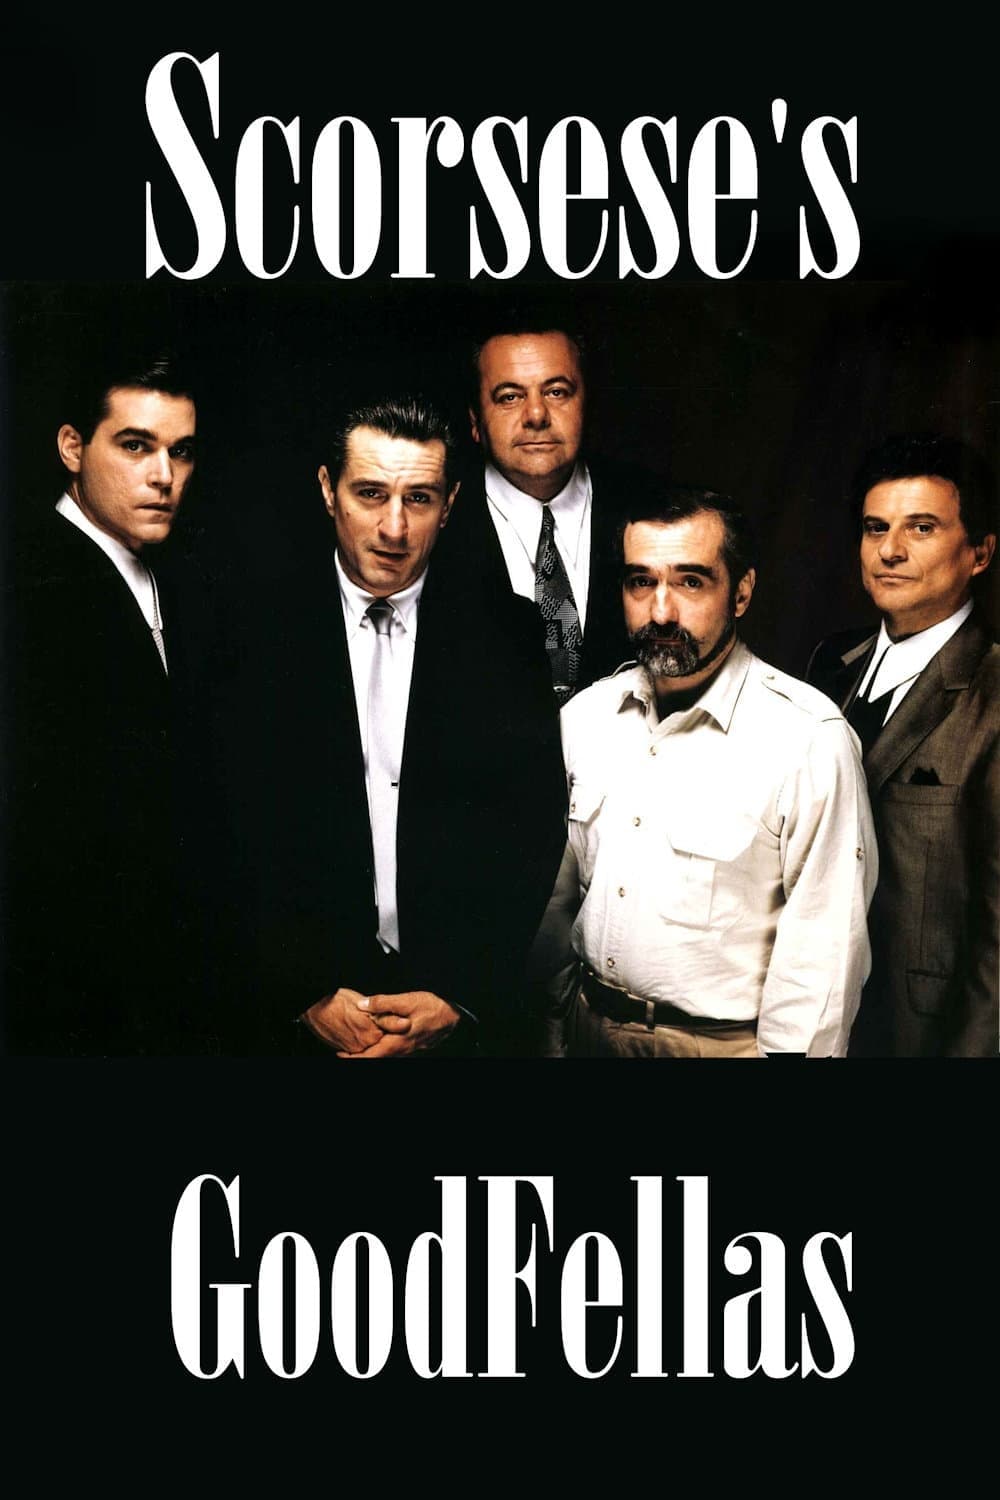 Scorsese's Goodfellas (2015)